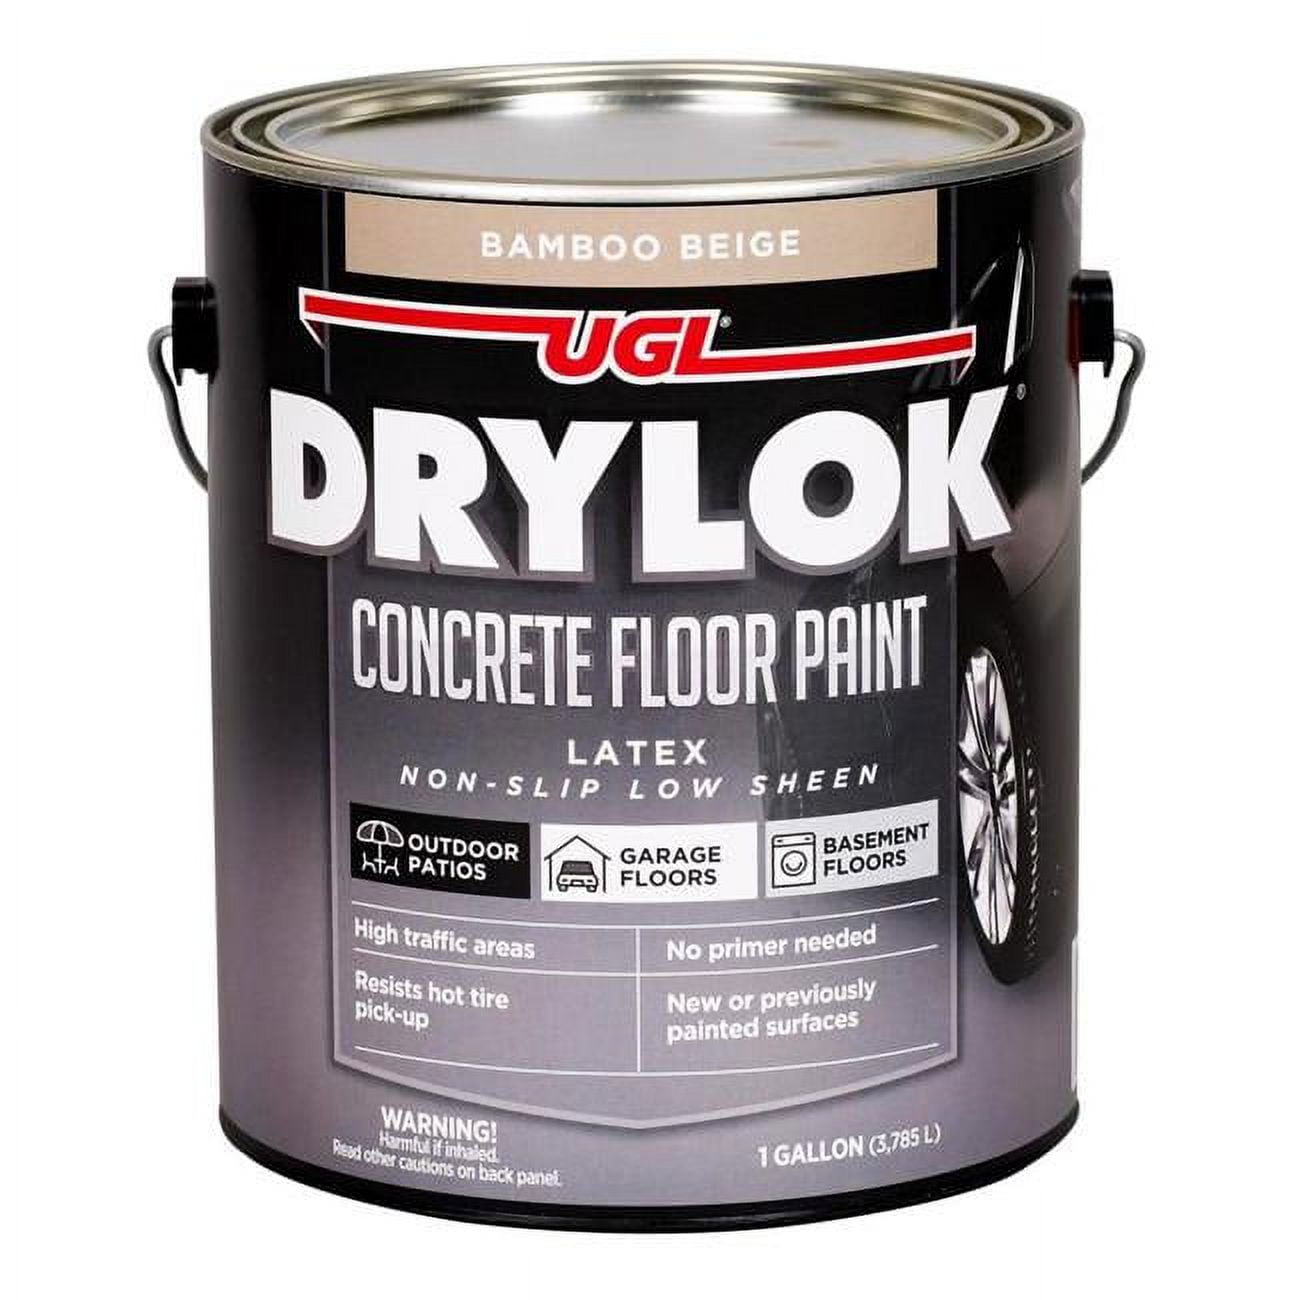 Clearance in Concrete Paint & Garage Floor Paint